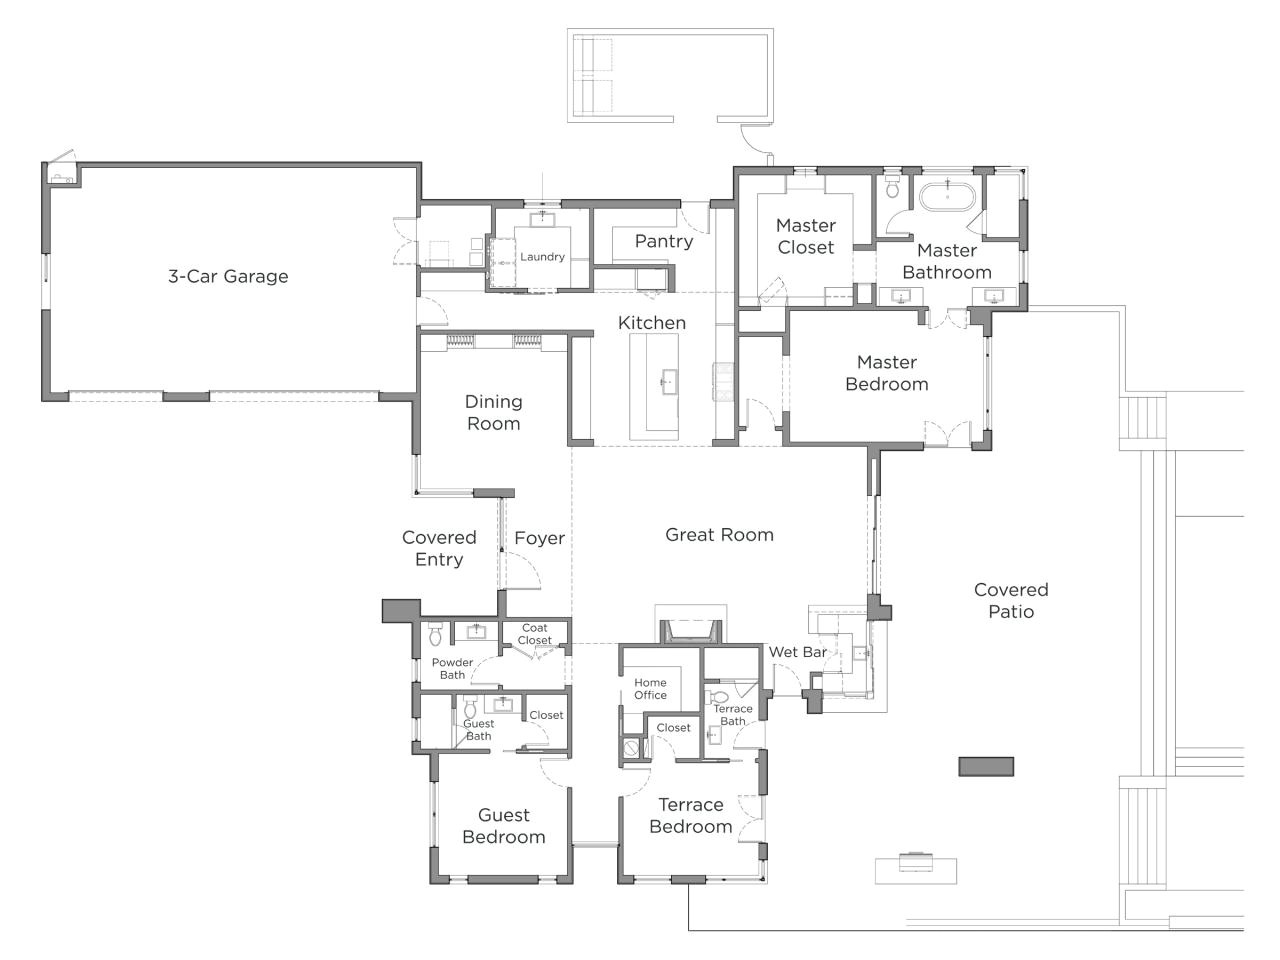 Hgtv Dream Home10 Floor Plan Hgtv Dream Home Floor Plan 2016